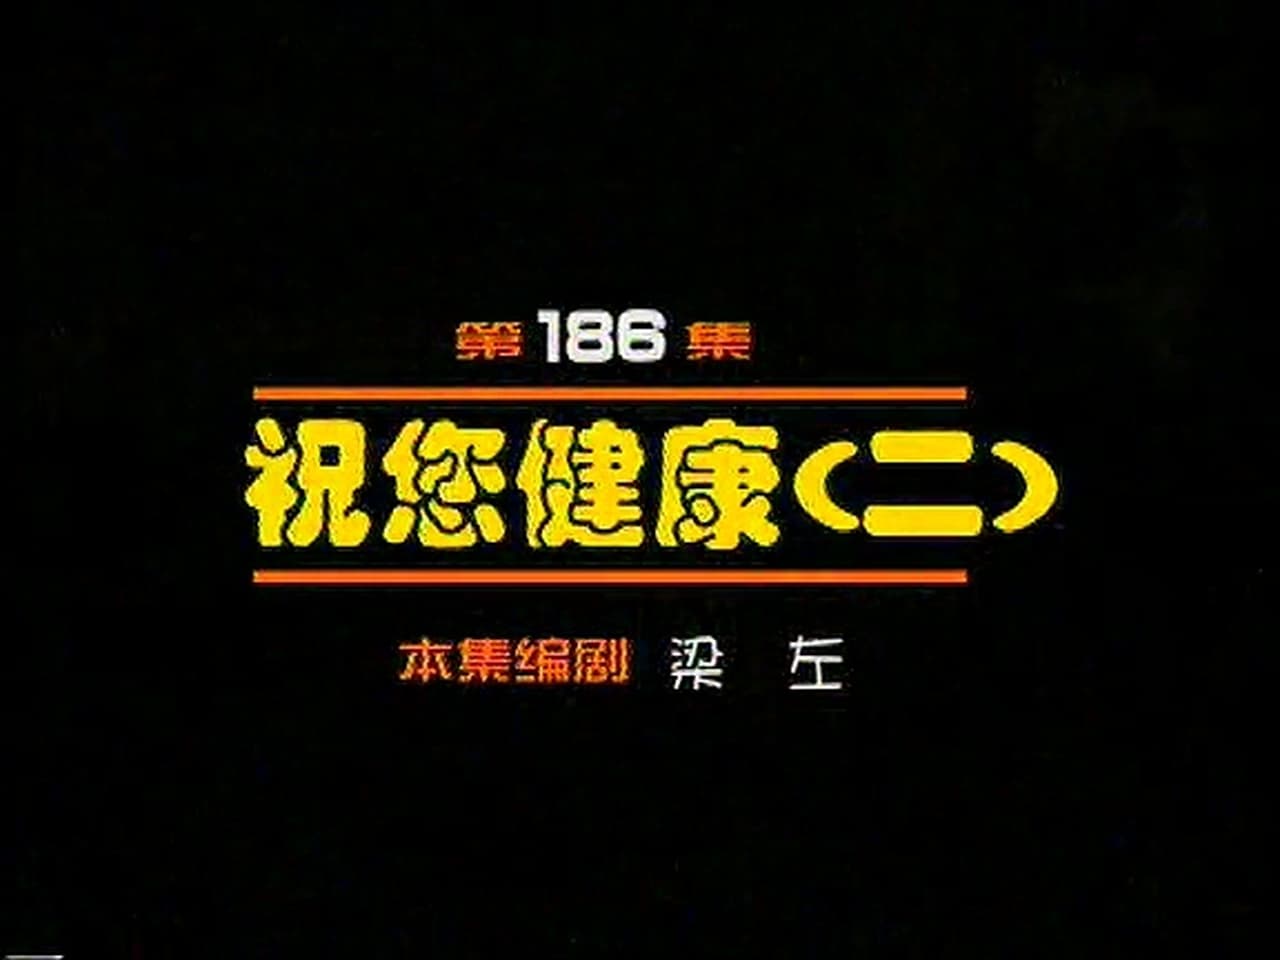 Episode 186